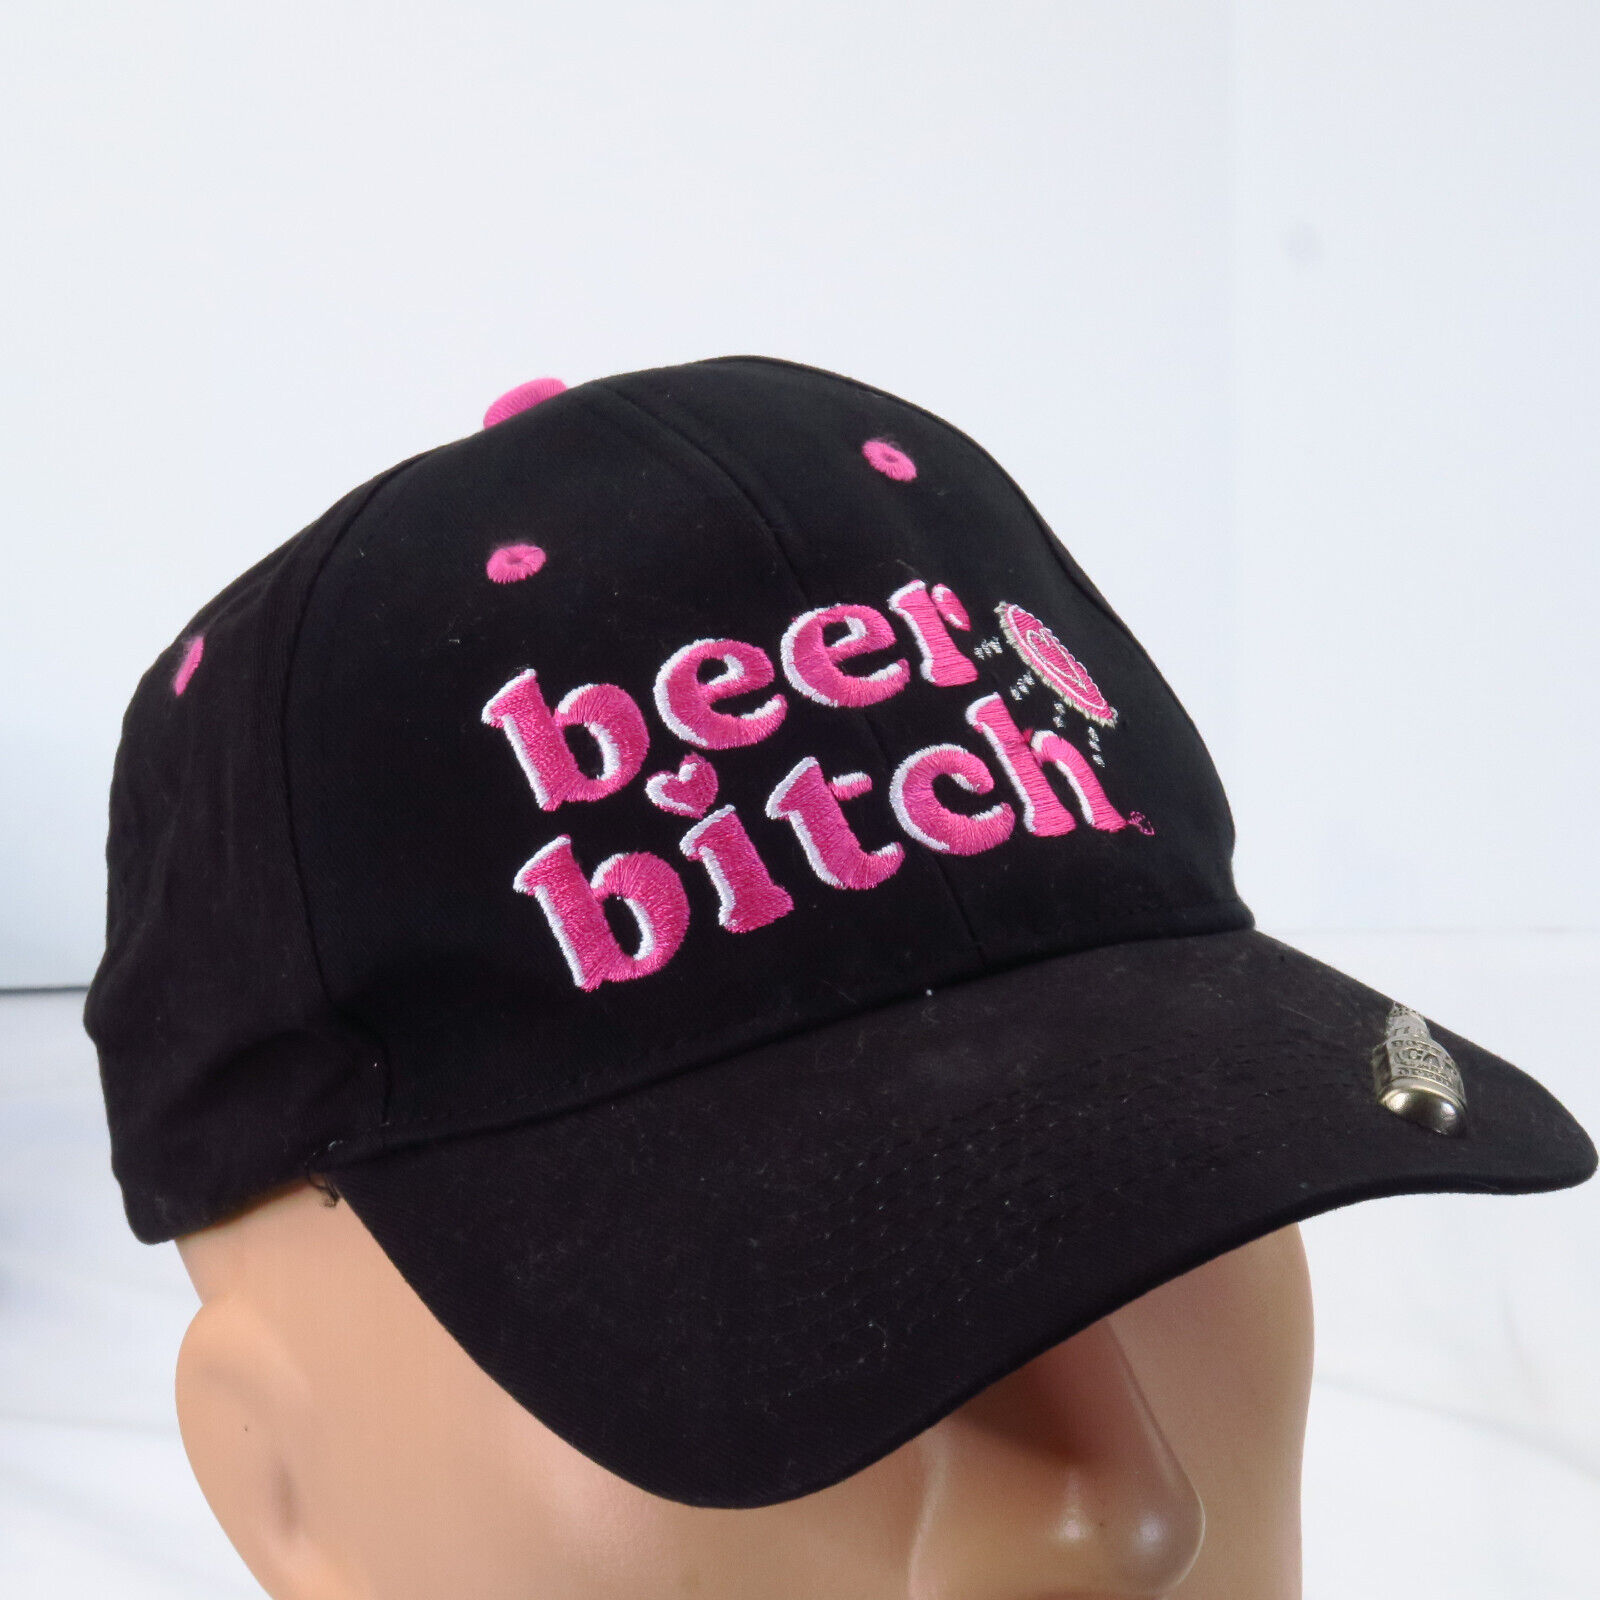 Beer Bitch Black Pink I Got Yours Heart Hat with Bottle Cap Opener Beach Club